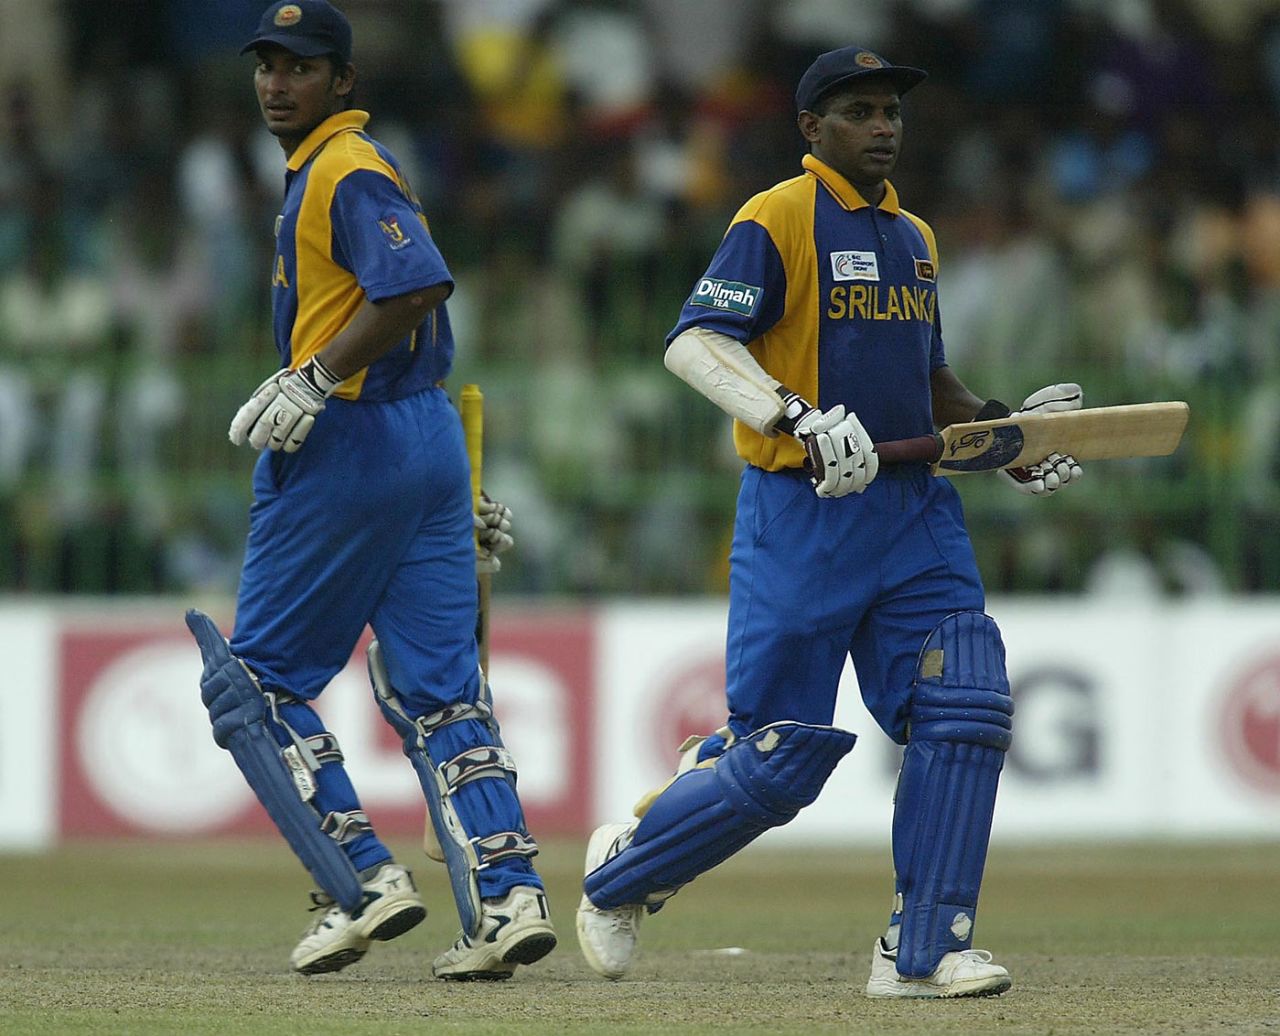 Kumar Sangakkara and Sanath Jayasuriya take a run, Sri Lanka v India, ICC Champions Trophy final, September 29, 2002, Colombo (RPS)